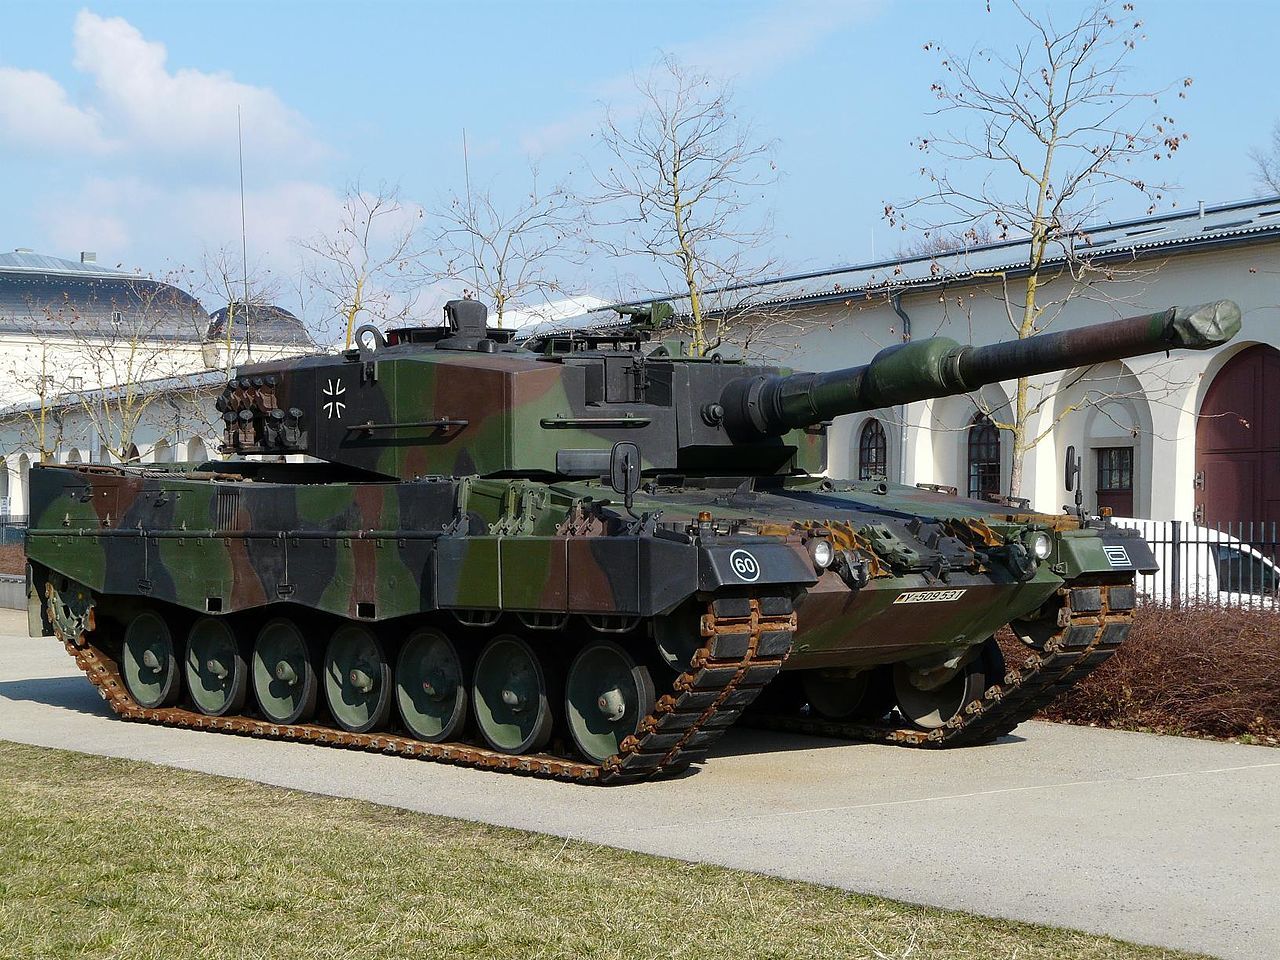 Leopard-2A4